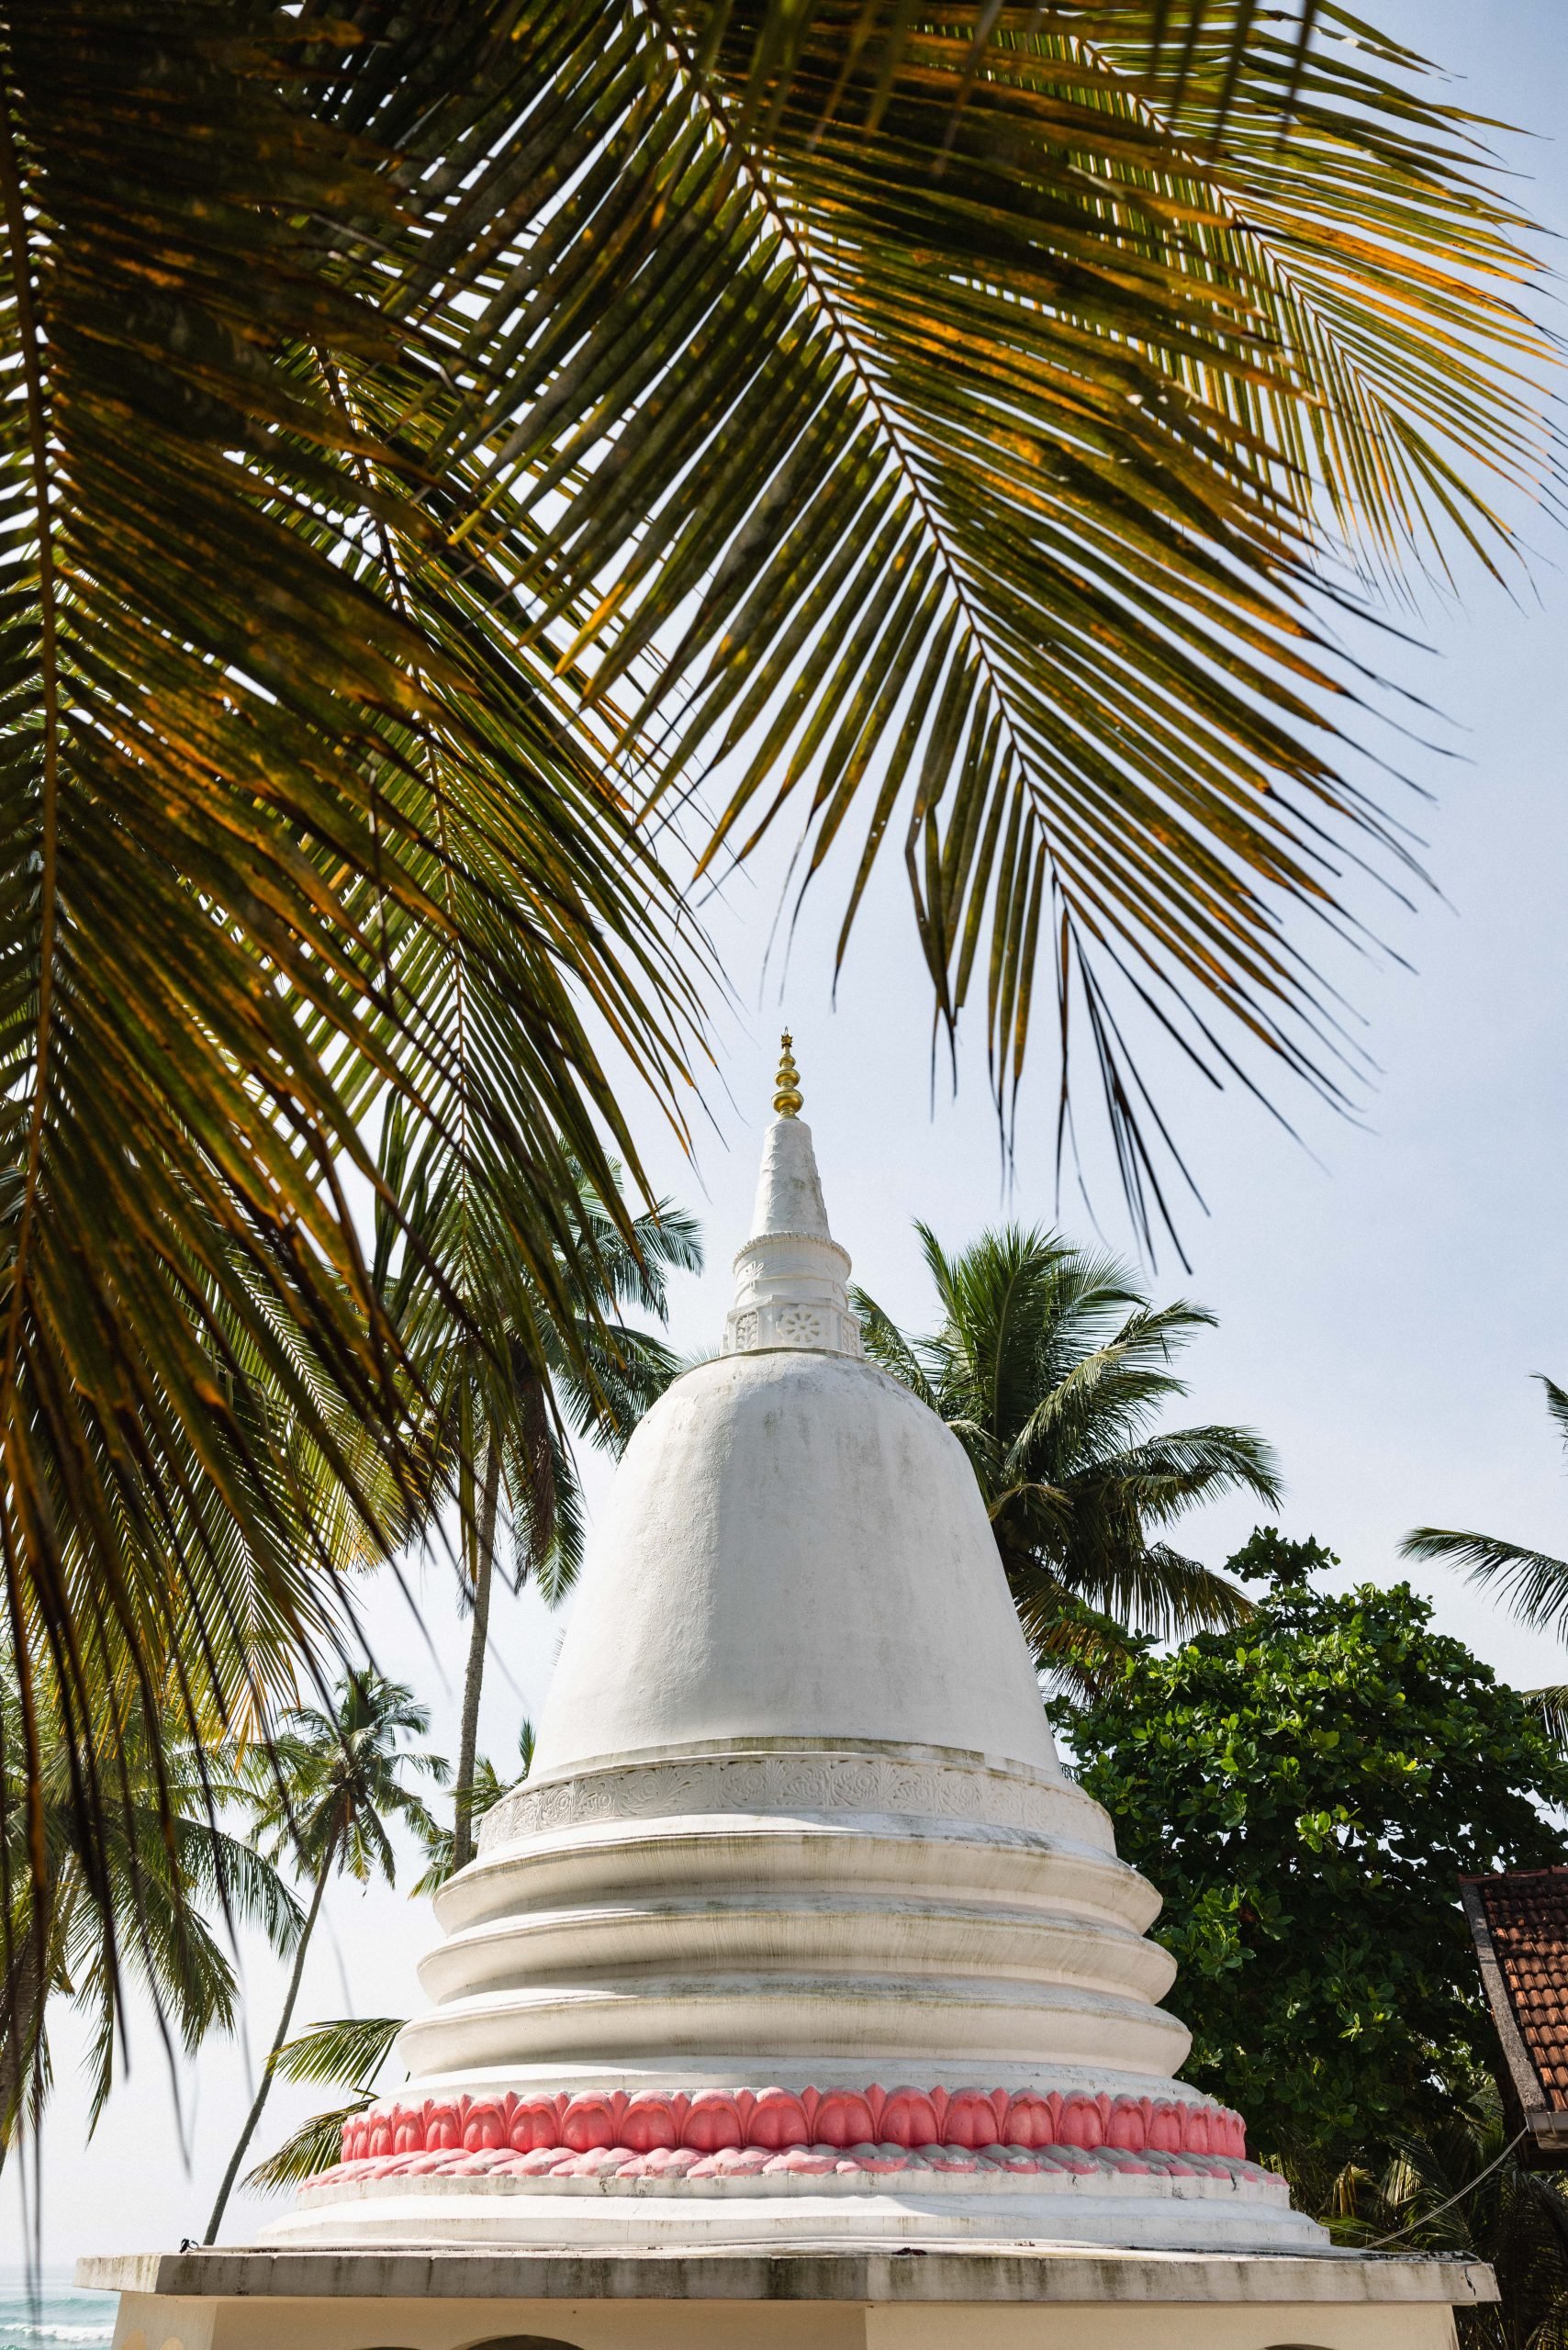 ANI Sri Lanka - Surrounding Area - Local Stupa